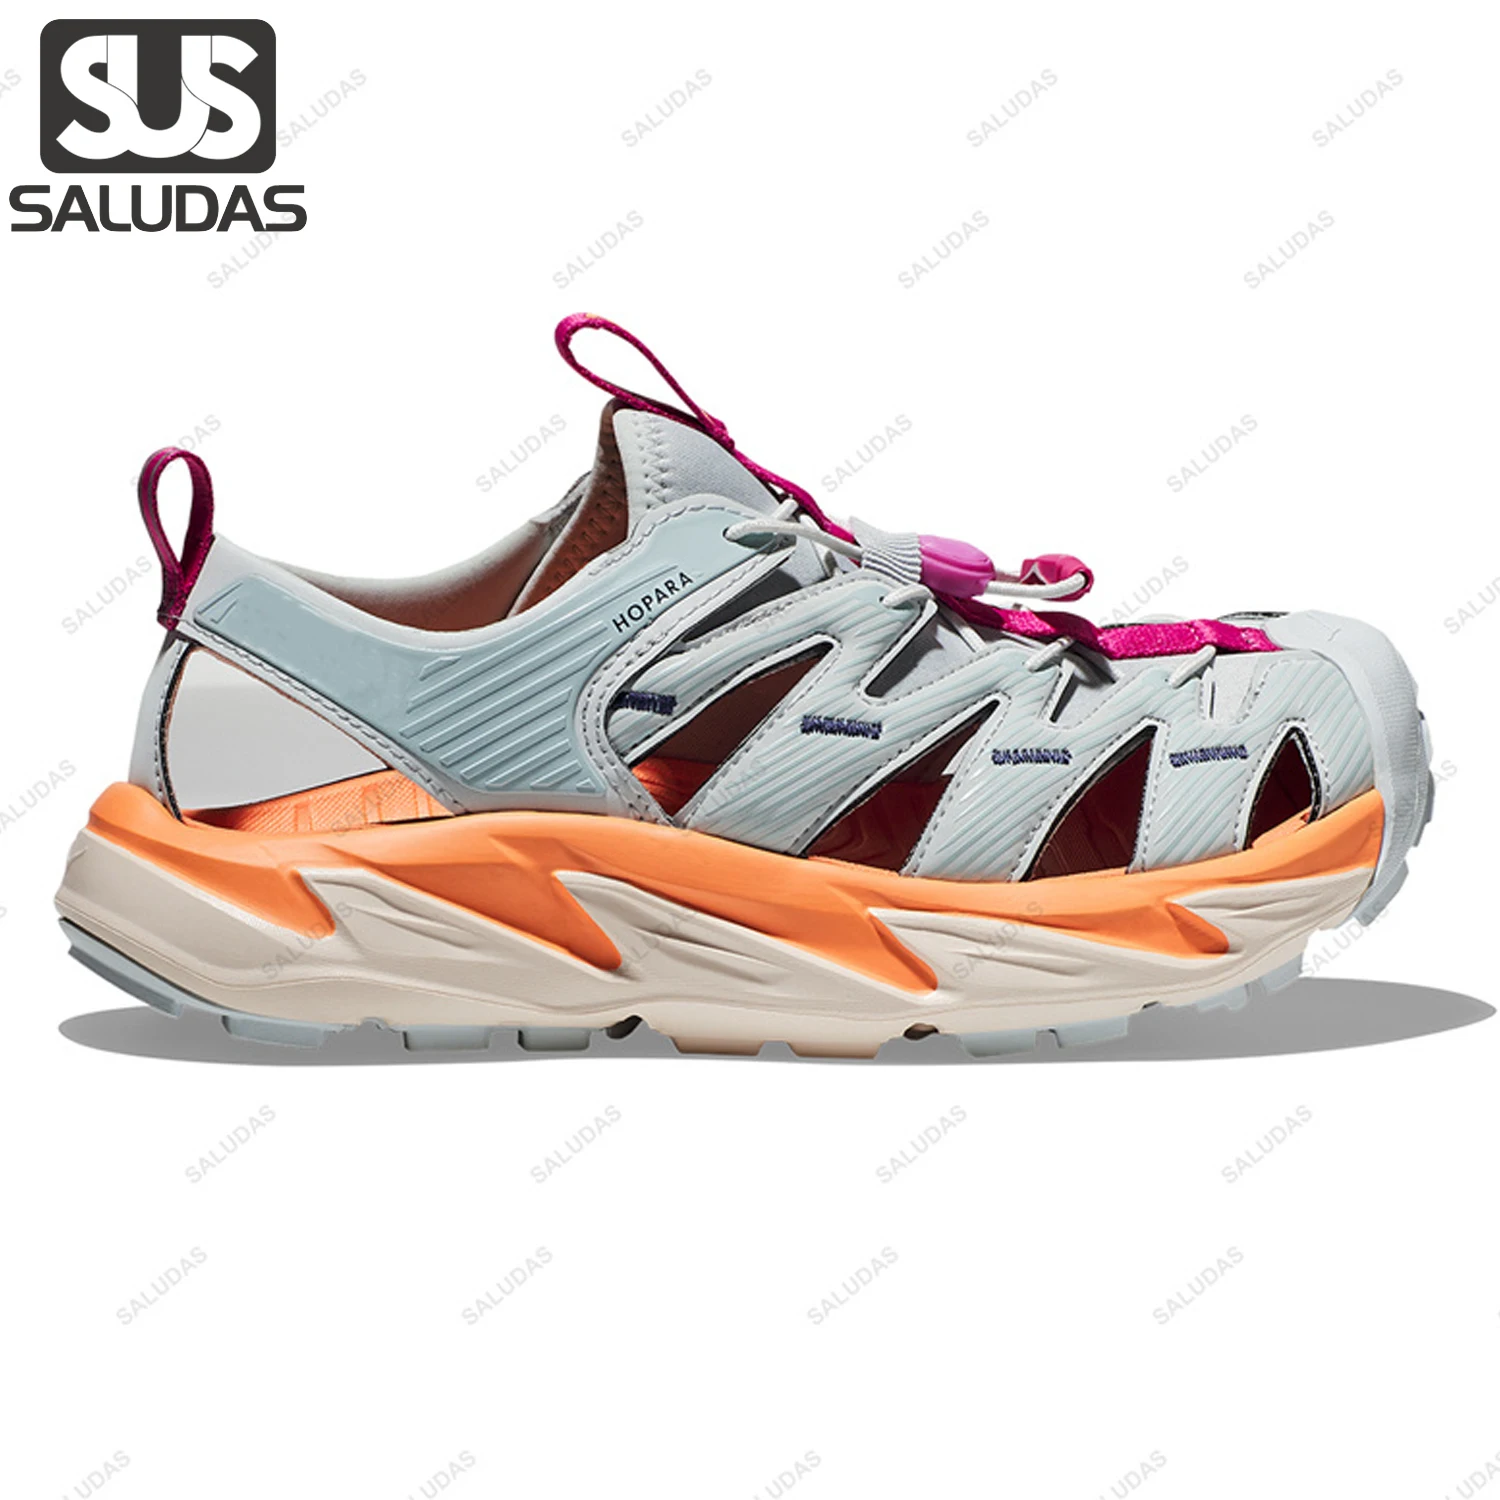 

SALUDAS For Hopara Women Sandals Hiking Trekking Wading Shoes Outdoor Non-slip Beach Slippers Original men Casual Sports Sandals